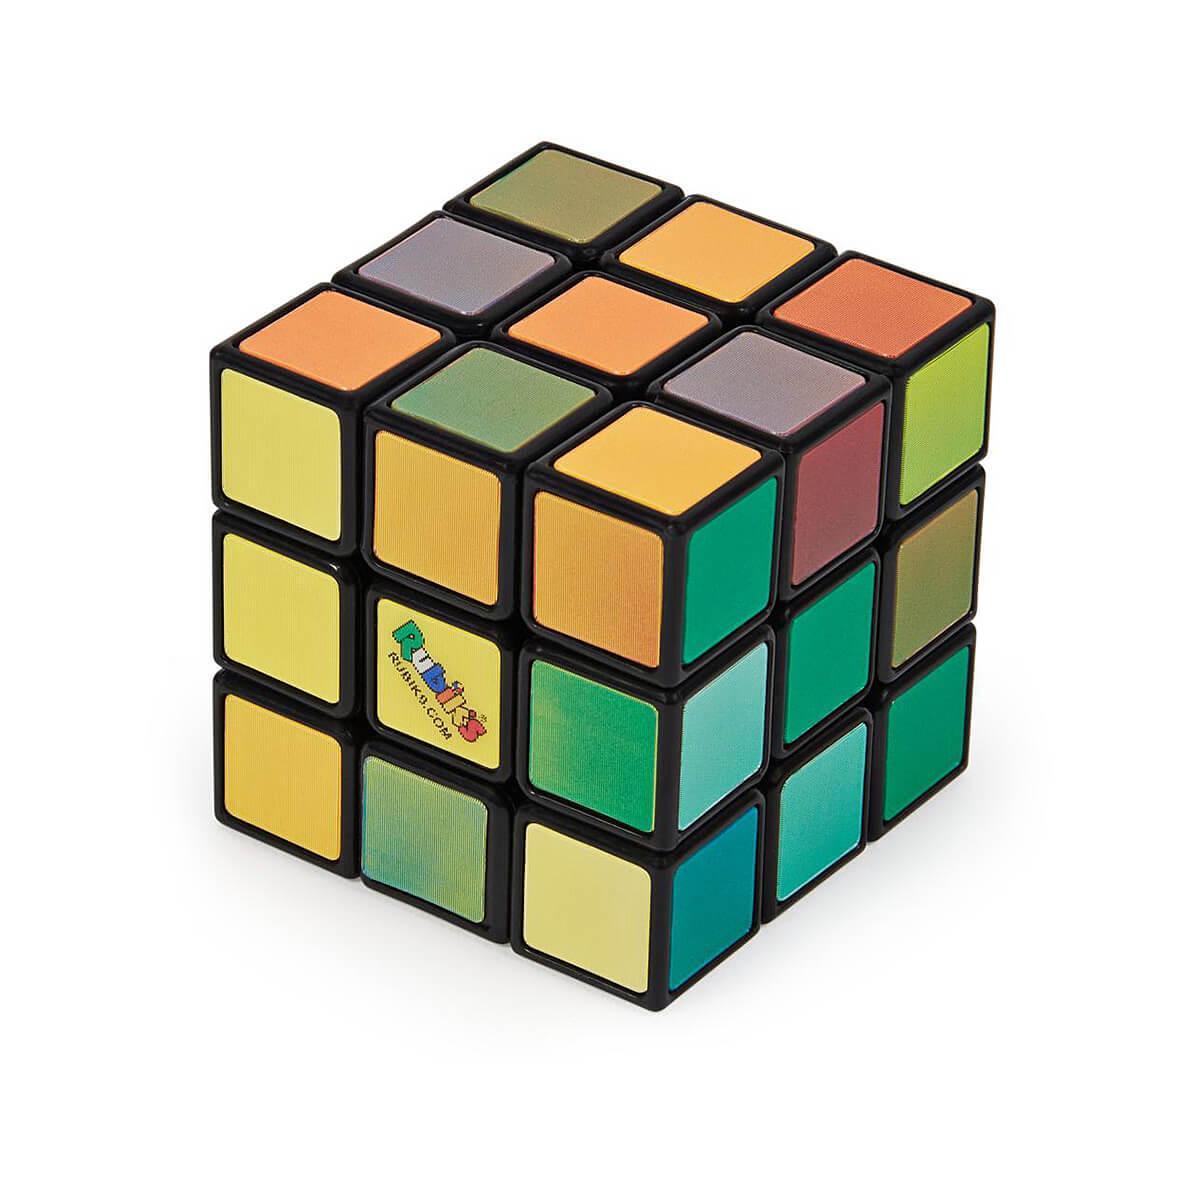 Fan Made Rubik's Companion Cube Is A Work Of Art - Game Informer